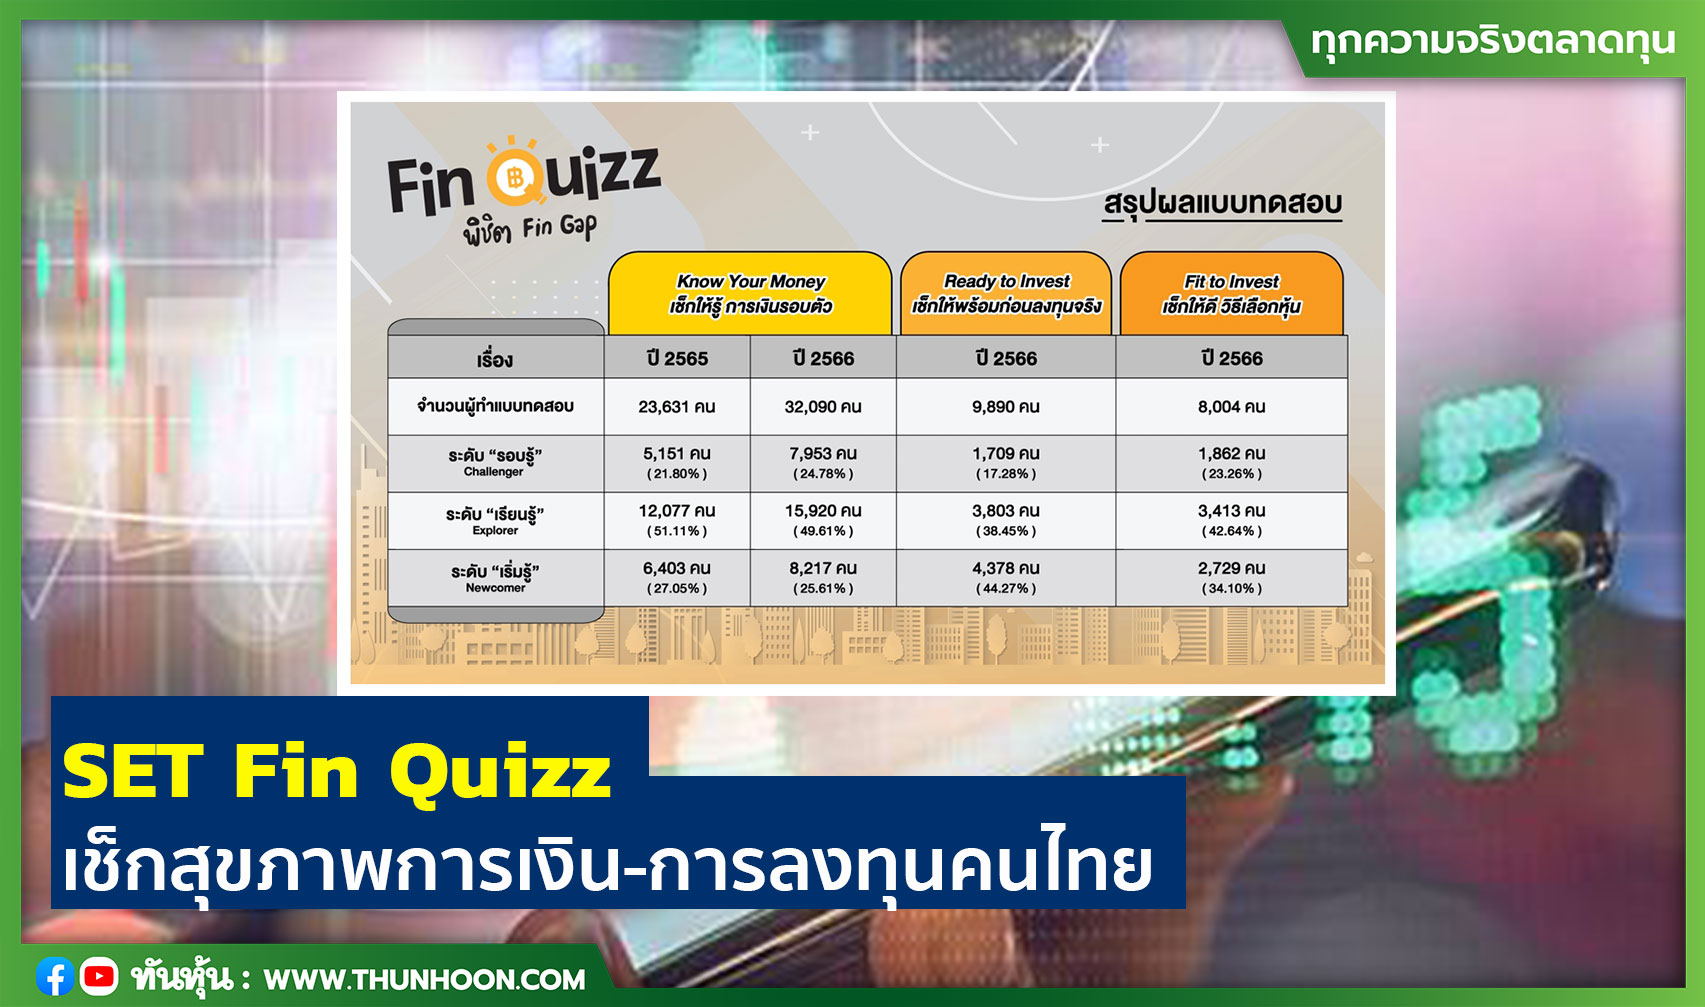 SET Fin Quizz เช็กสุขภาพการเงิน-การลงทุนคนไทย